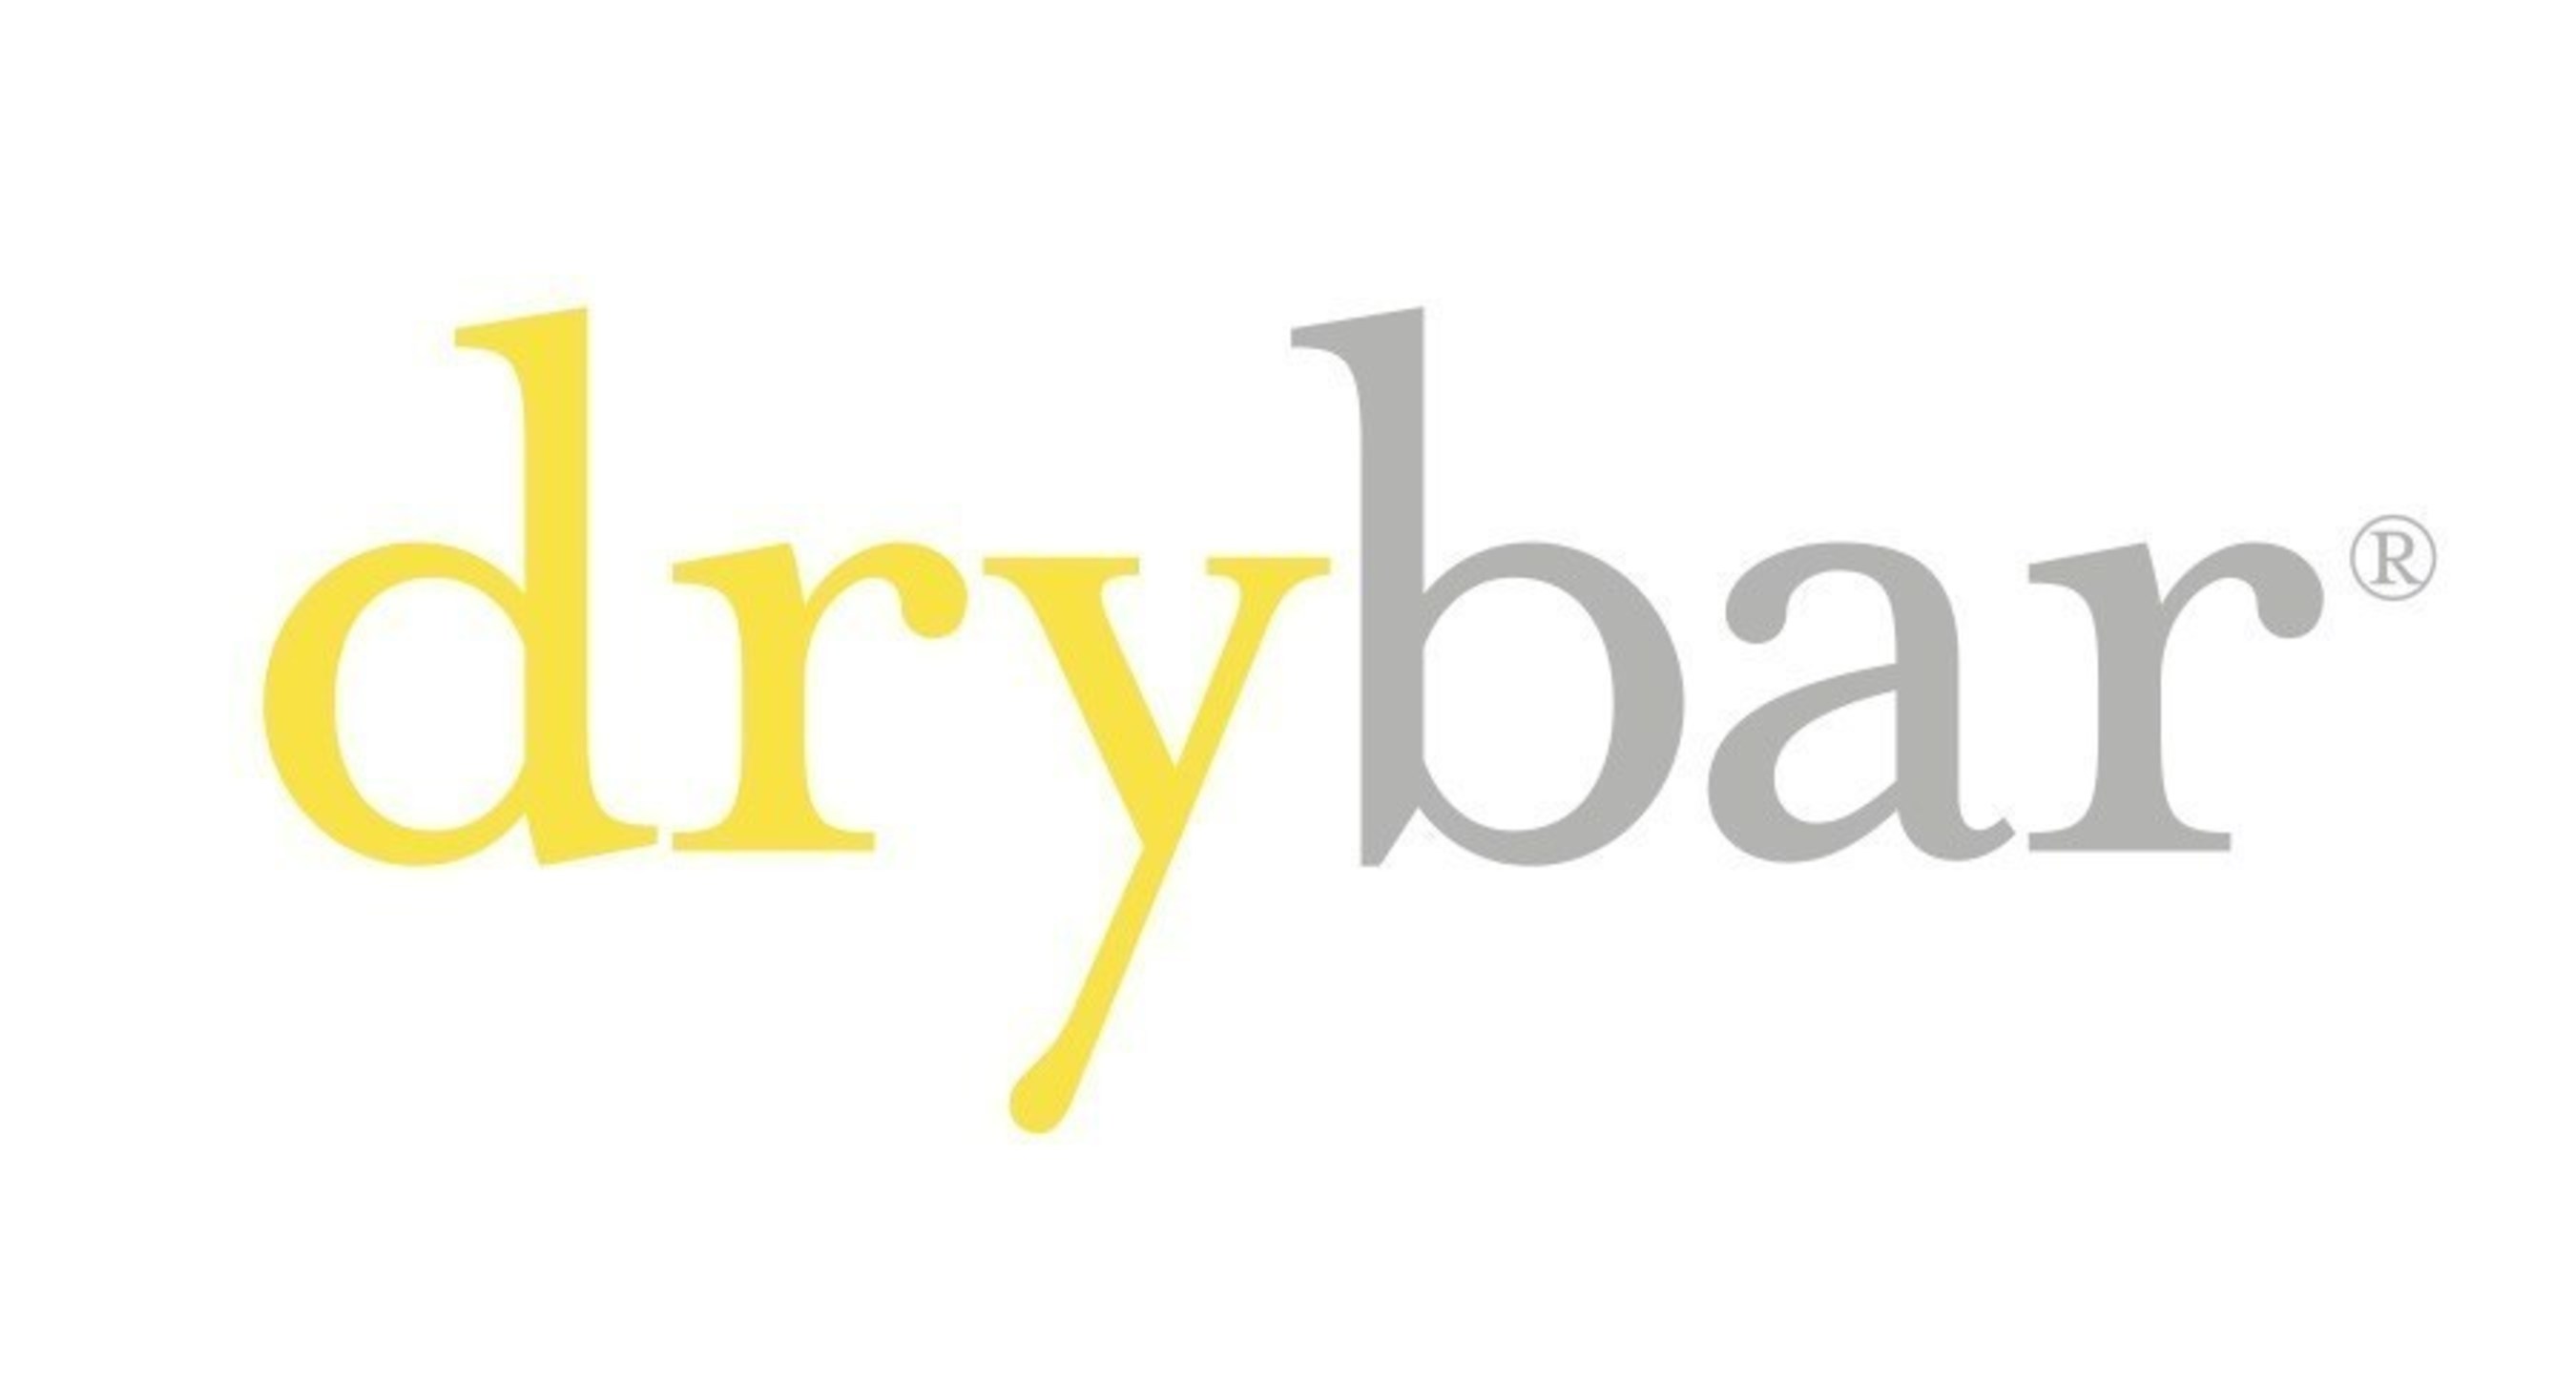 Drybar Holdings